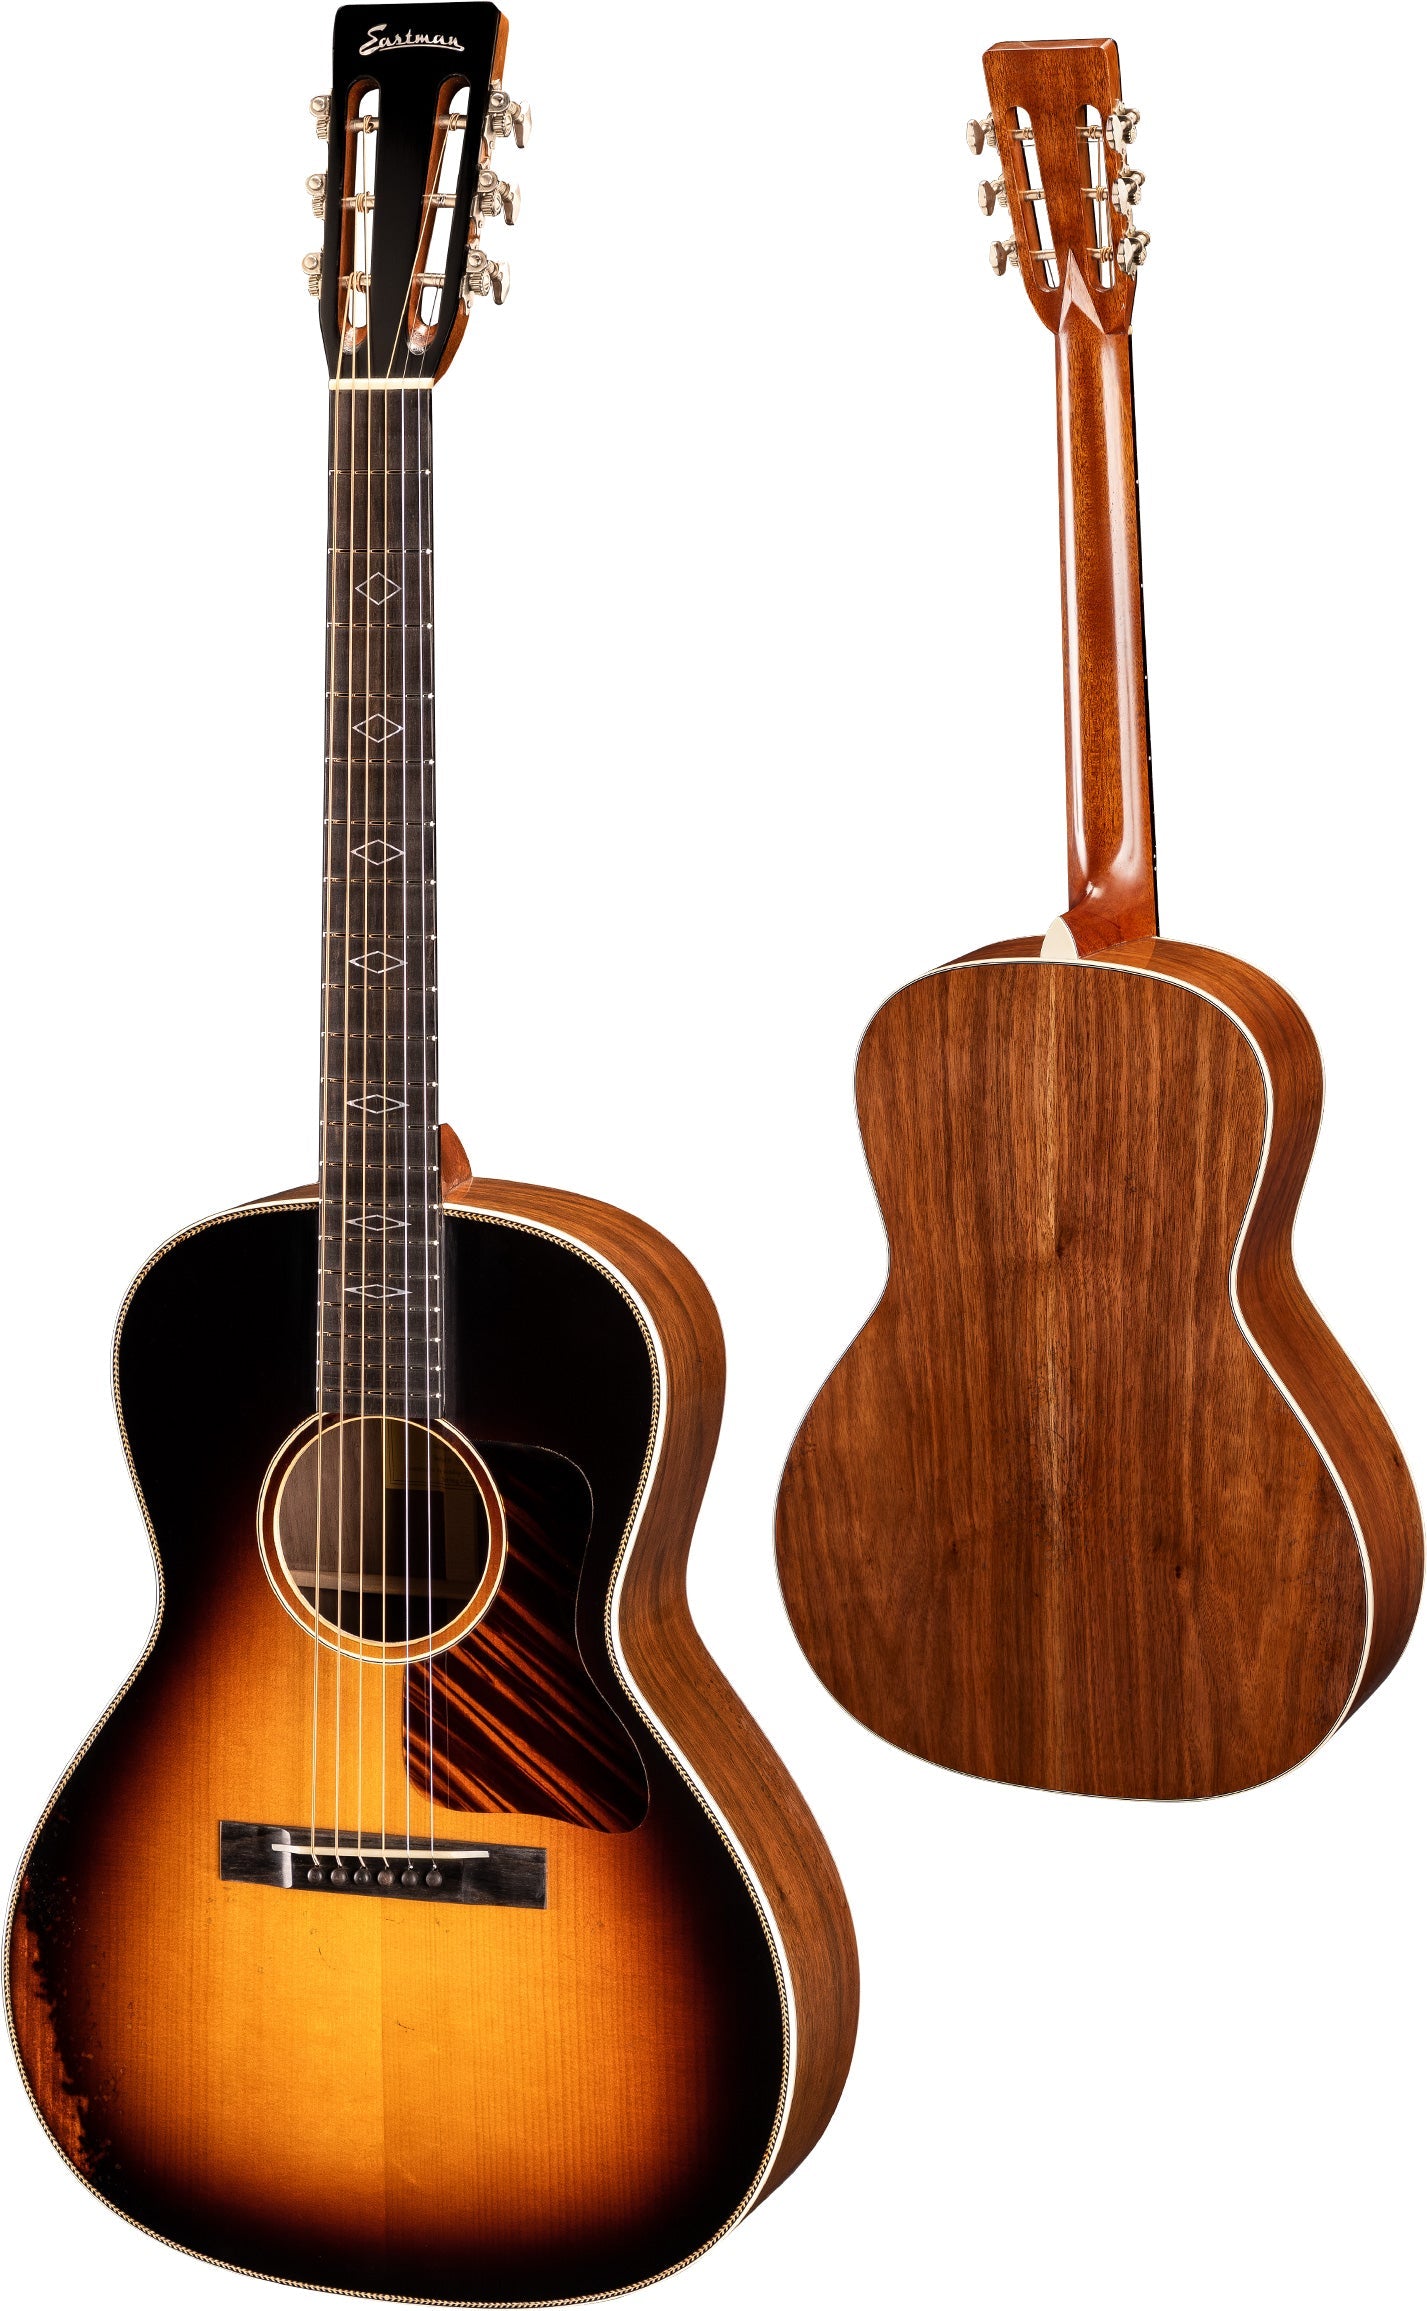 Eastman E22OOSS/v-SB Acoustic Guitar, Acoustic Guitar for sale at Richards Guitars.